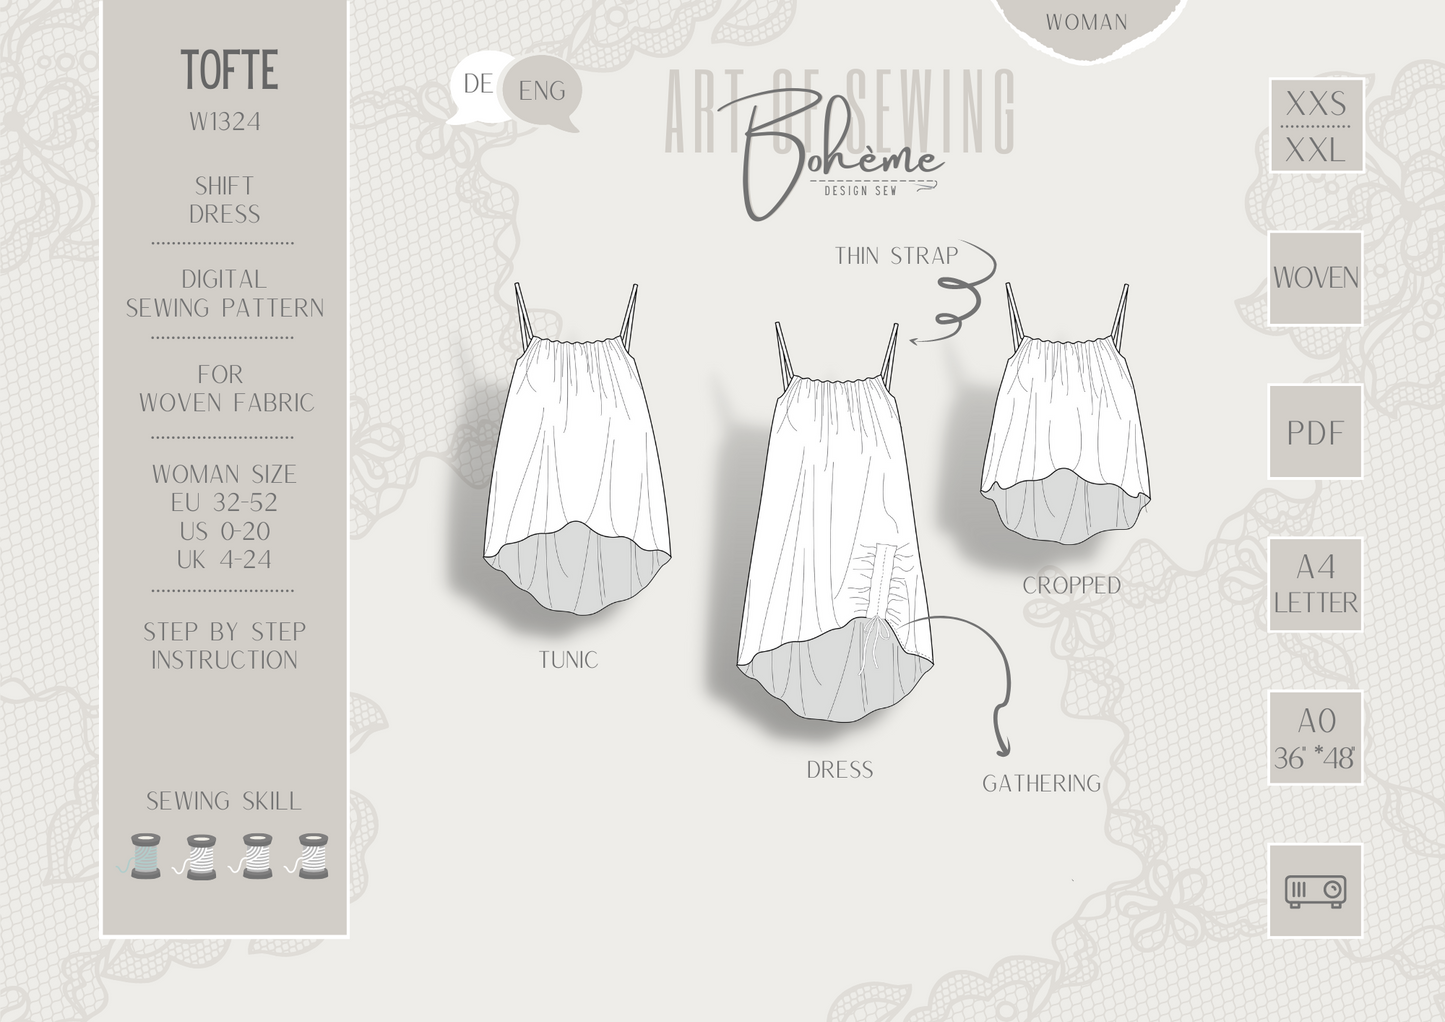 Tunic Dress | Tofte W1324 | Woman EU32 (XXS) - EU52 (XXL) | Digital Sewing Pattern | PDF